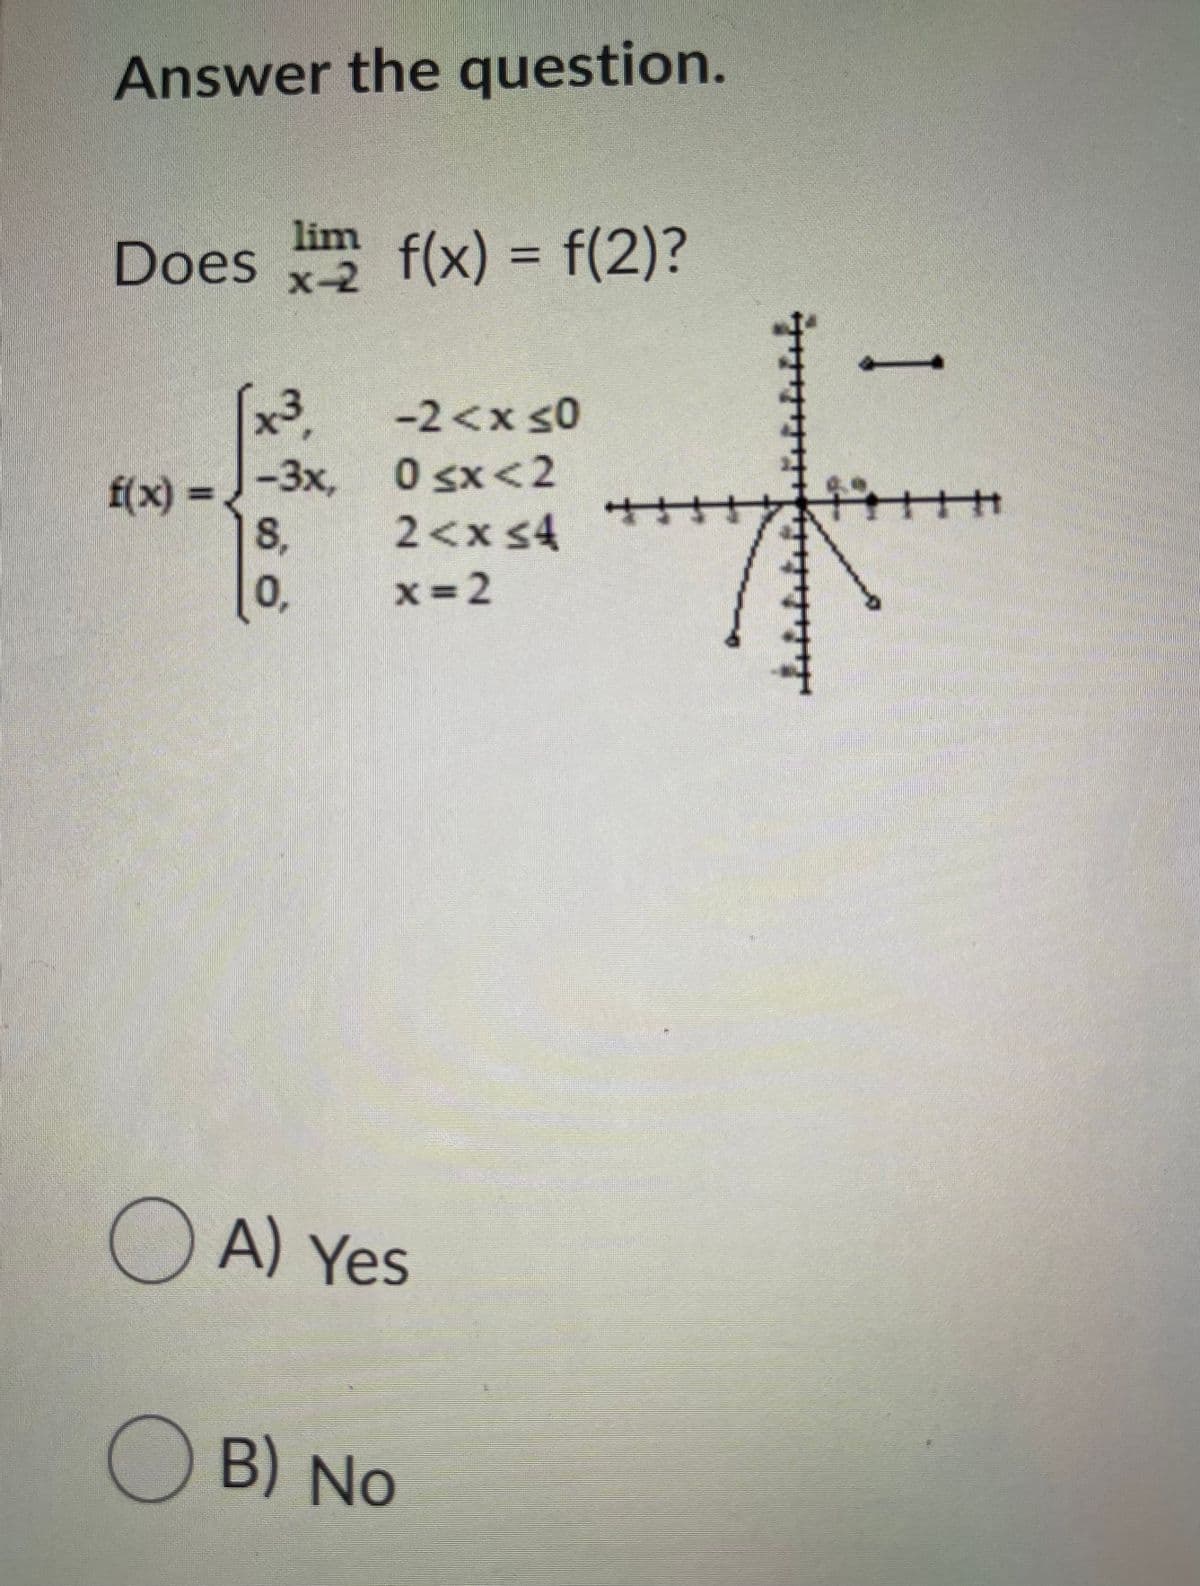 Answer the question.
lim
Does
f(x) = f(2)?
x-2
x3,
-2<x s0
0 sx<2
2<x s4
-3x,
f(x) =
8,
0,
x 2
O A) Yes
O B) No
